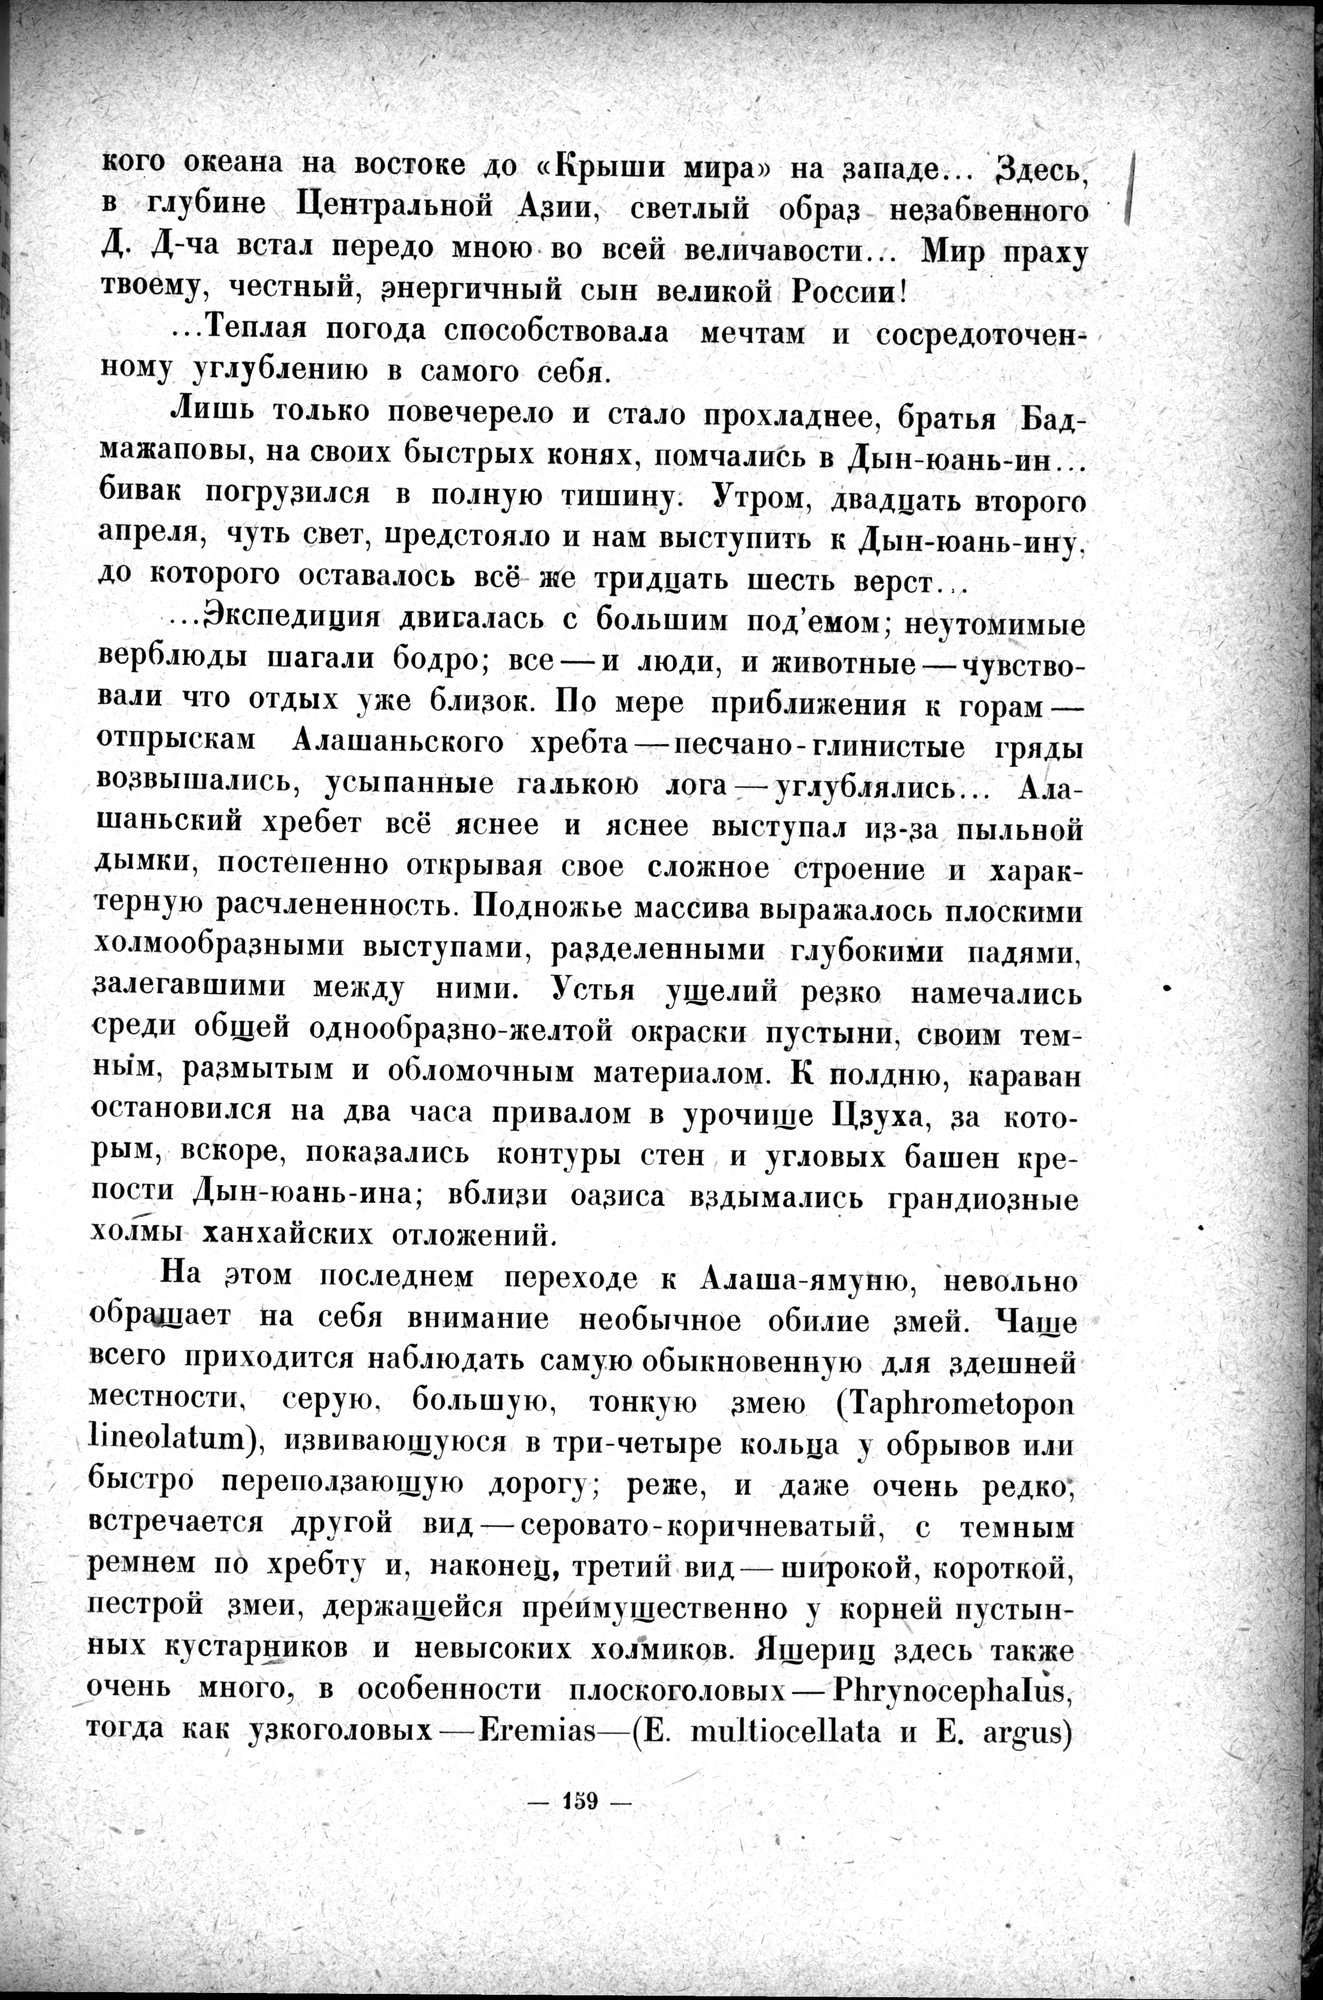 Mongoliya i Amdo i mertby gorod Khara-Khoto : vol.1 / Page 187 (Grayscale High Resolution Image)